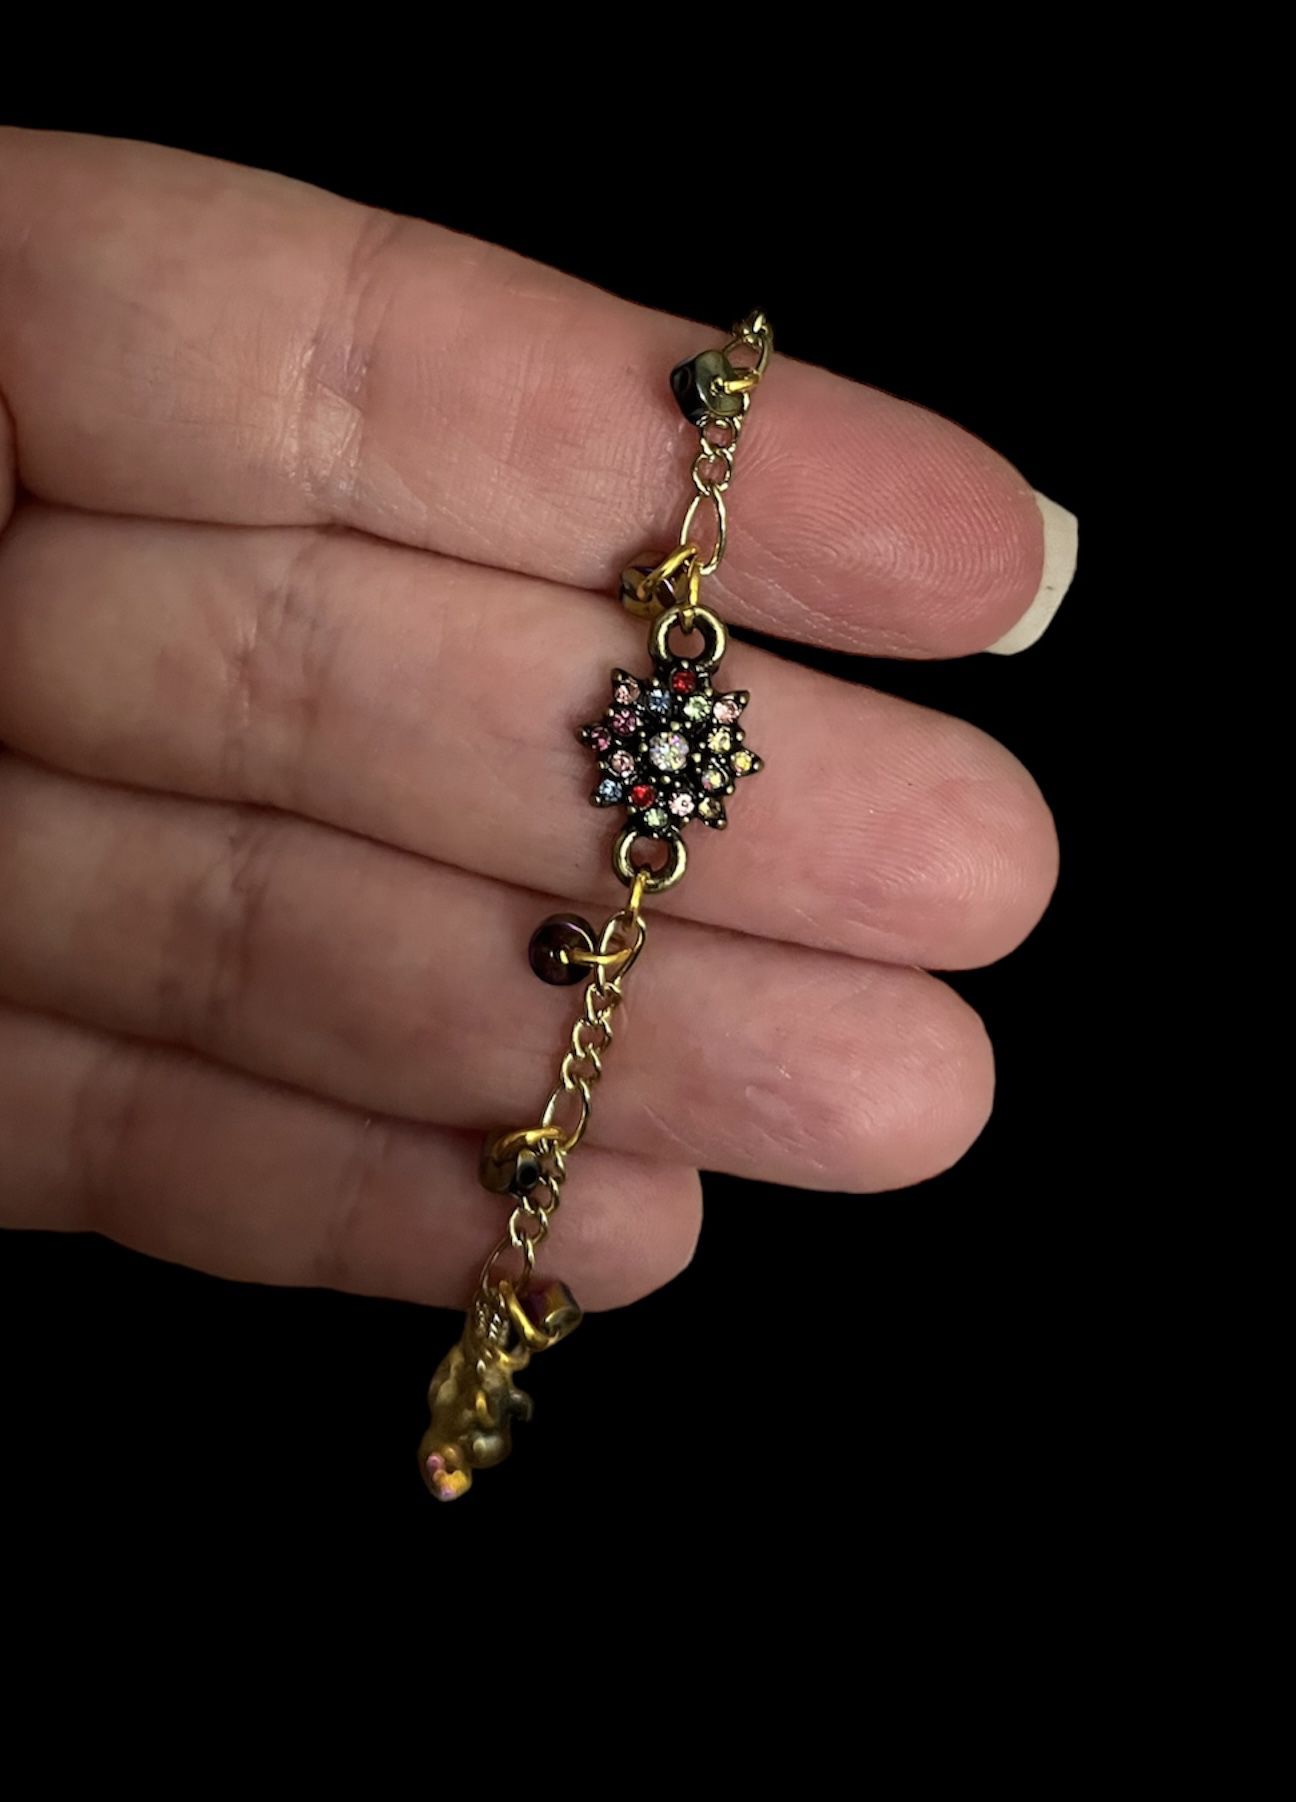 Handmade Ankle Bracelet - Rhinestone Flower With Glass Iridescent Beads